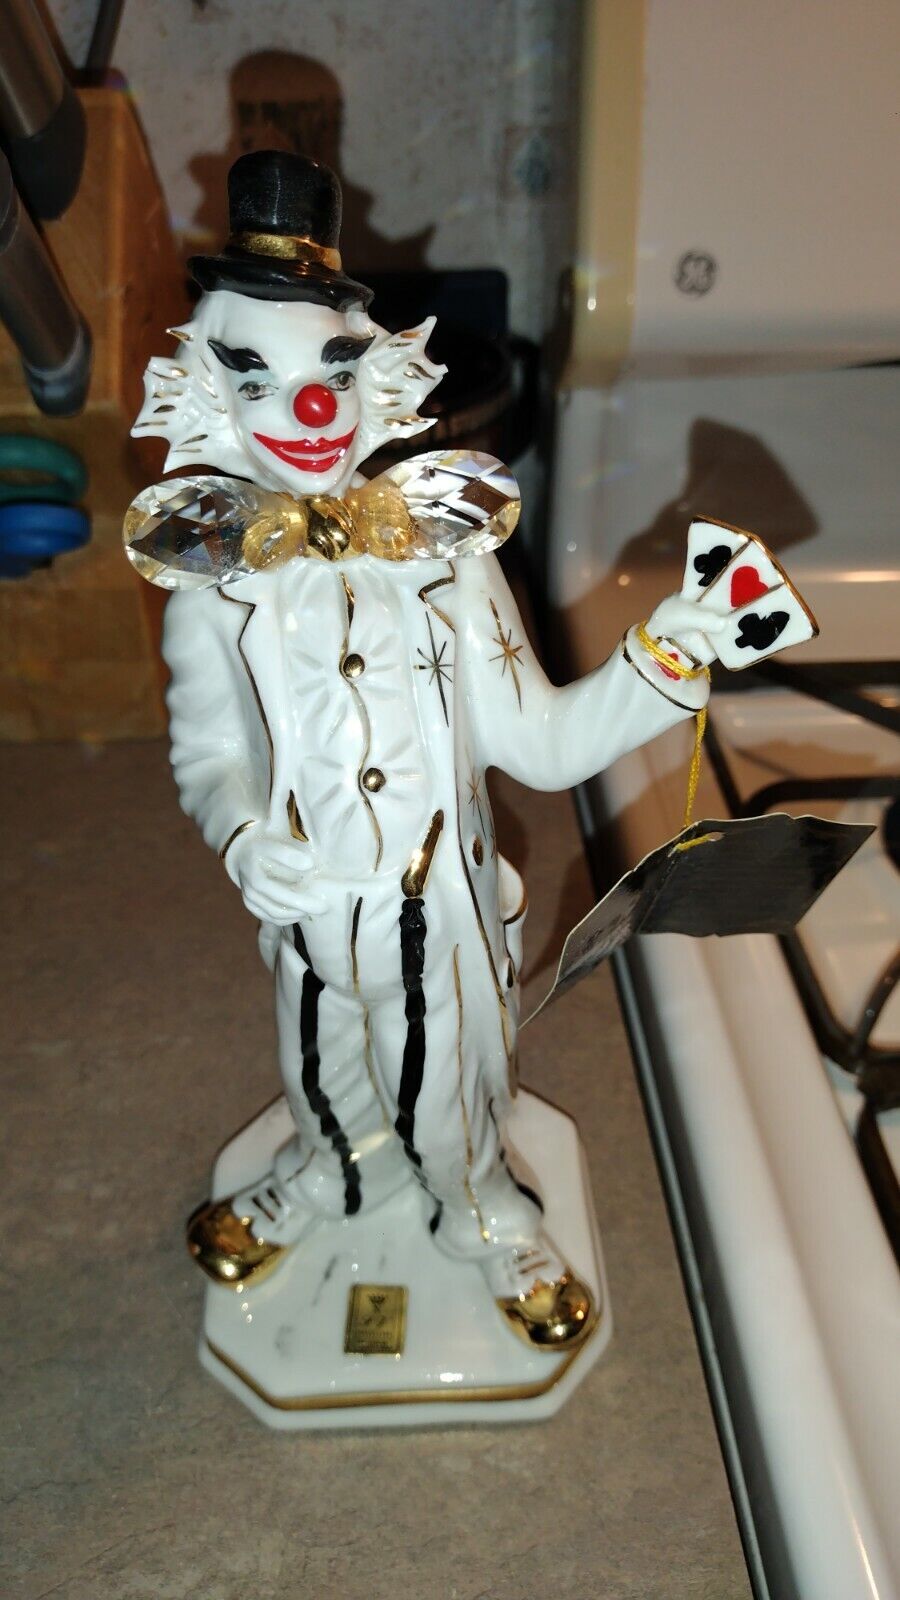 Vittorio Sabadin Porcelain Clown Figurine With Card Up His Sleeve